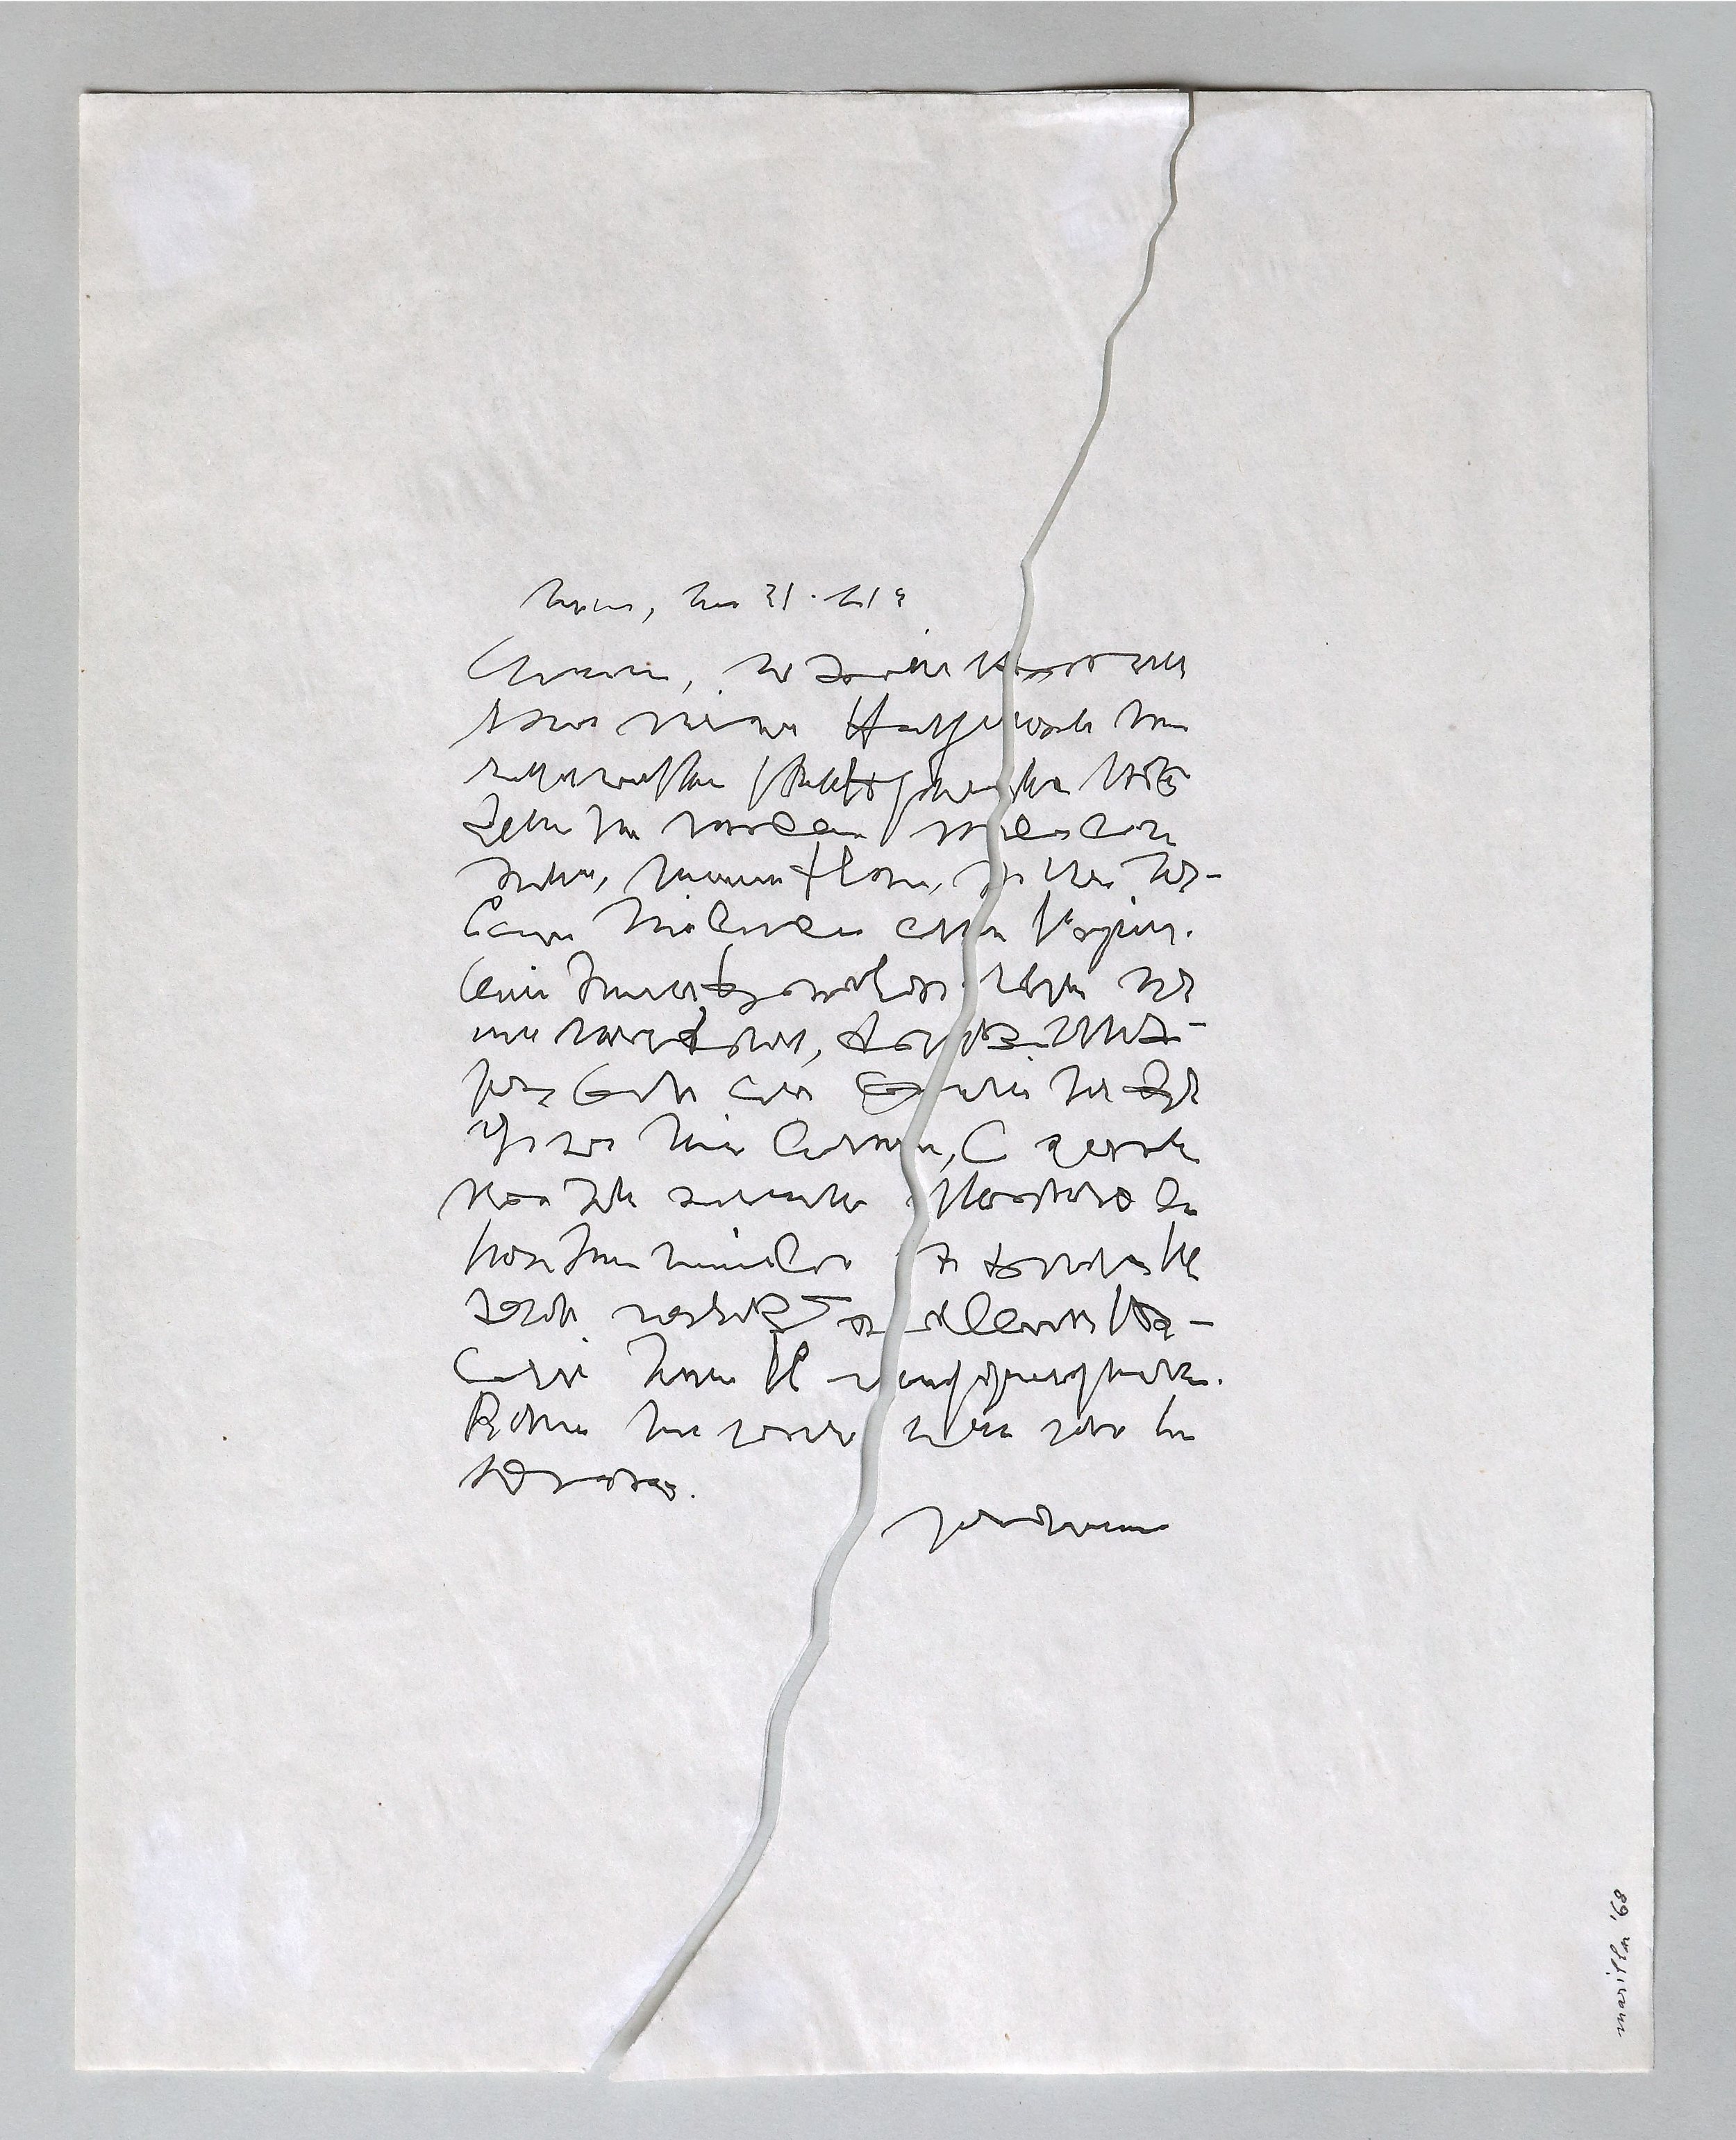 Marilla Battilana, "Cracked letter", 1968